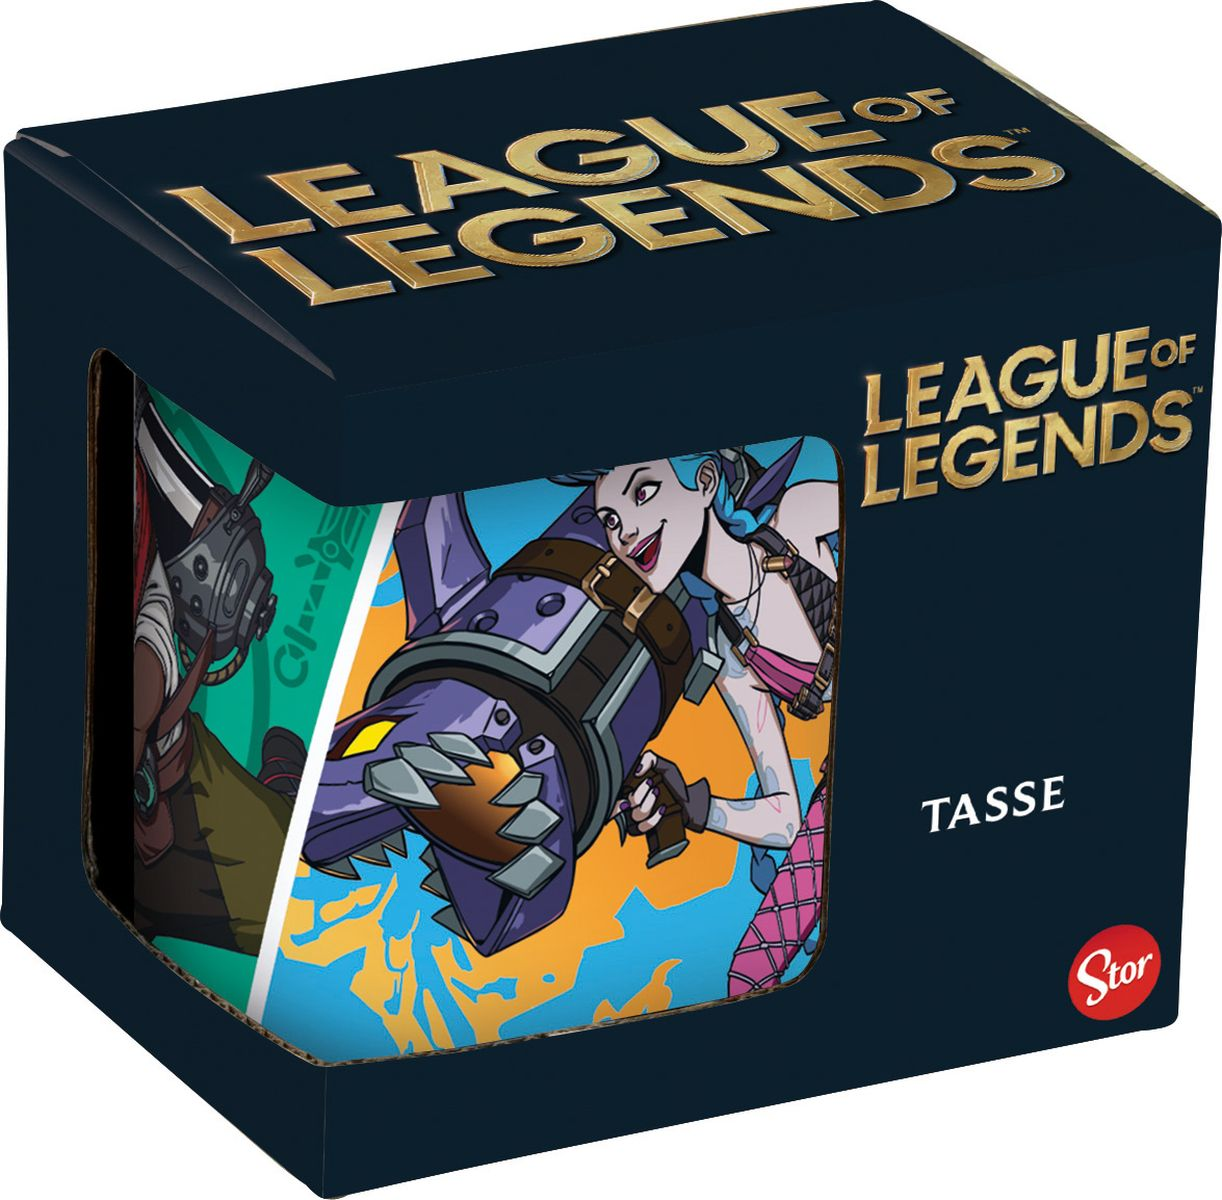 Legends of & Vi, Jinx League Ekko -